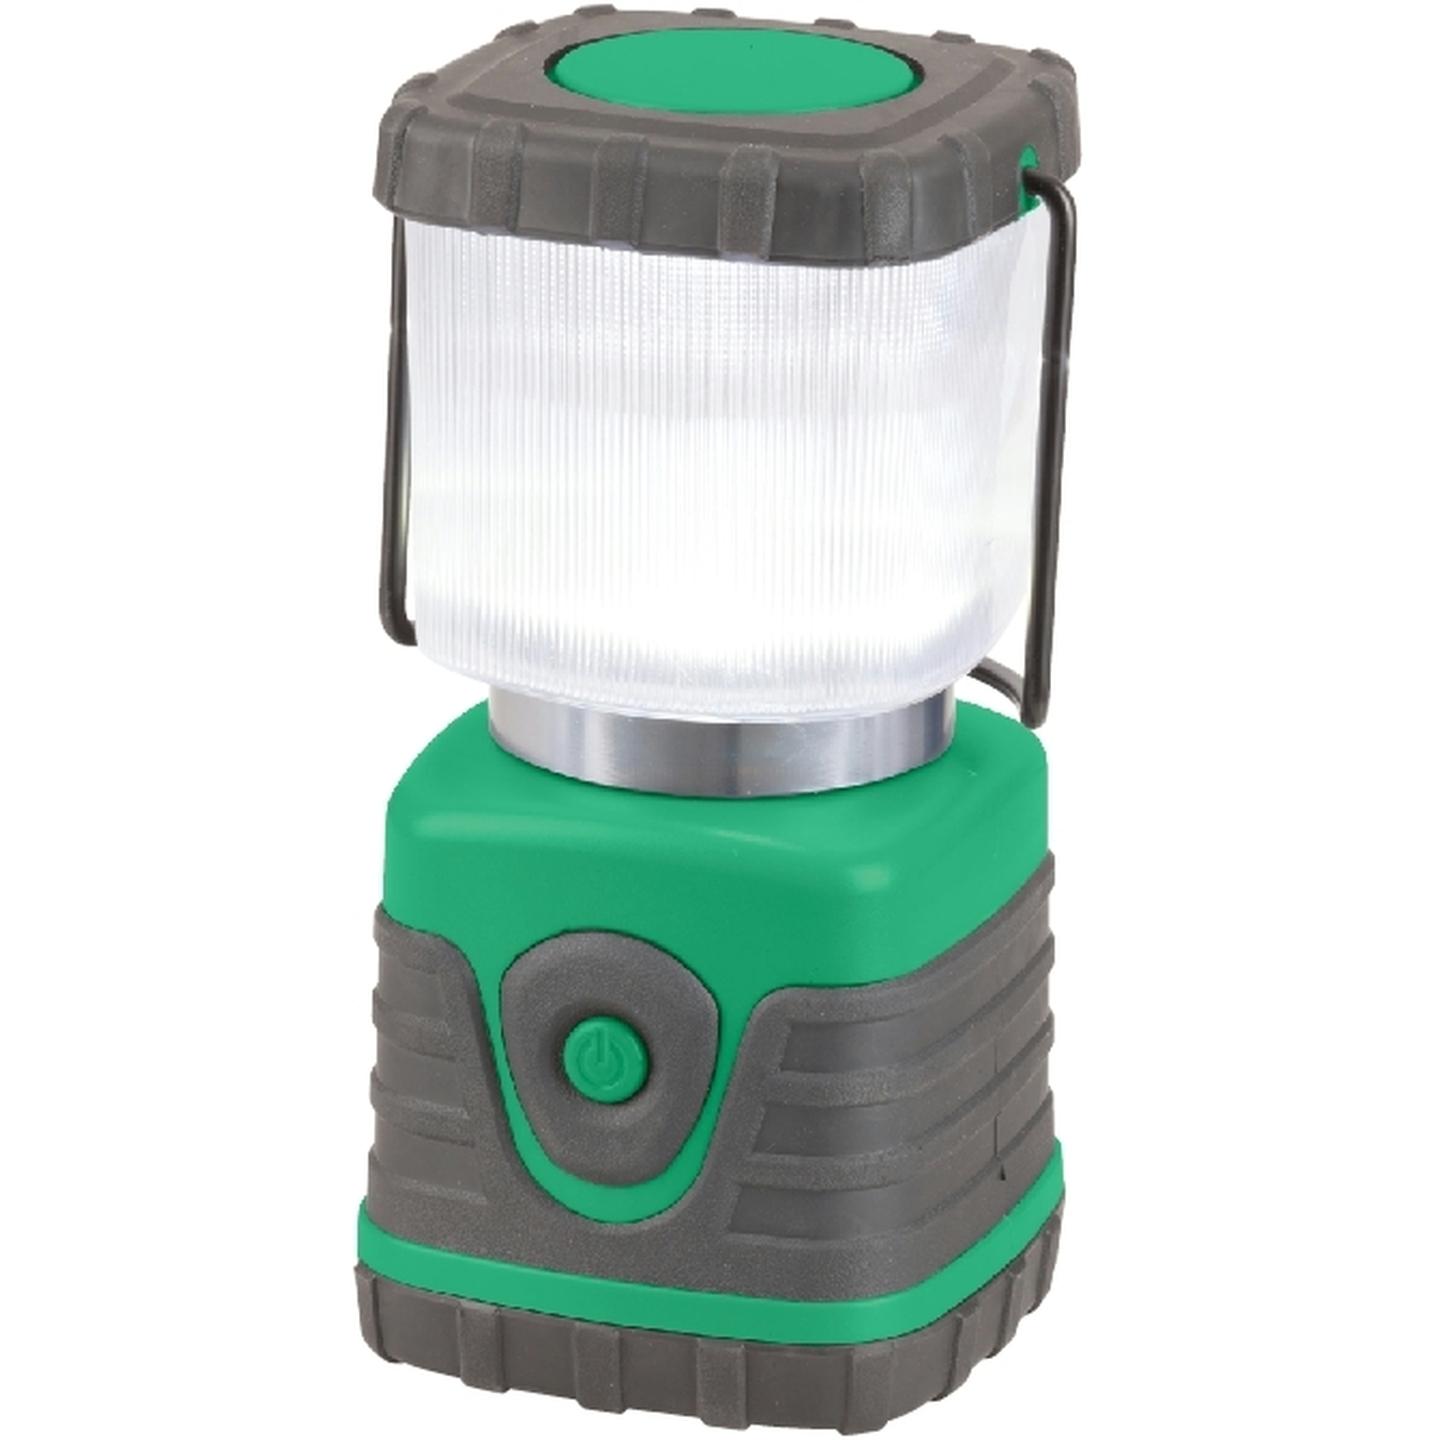 High Power Cree XML LED Lantern